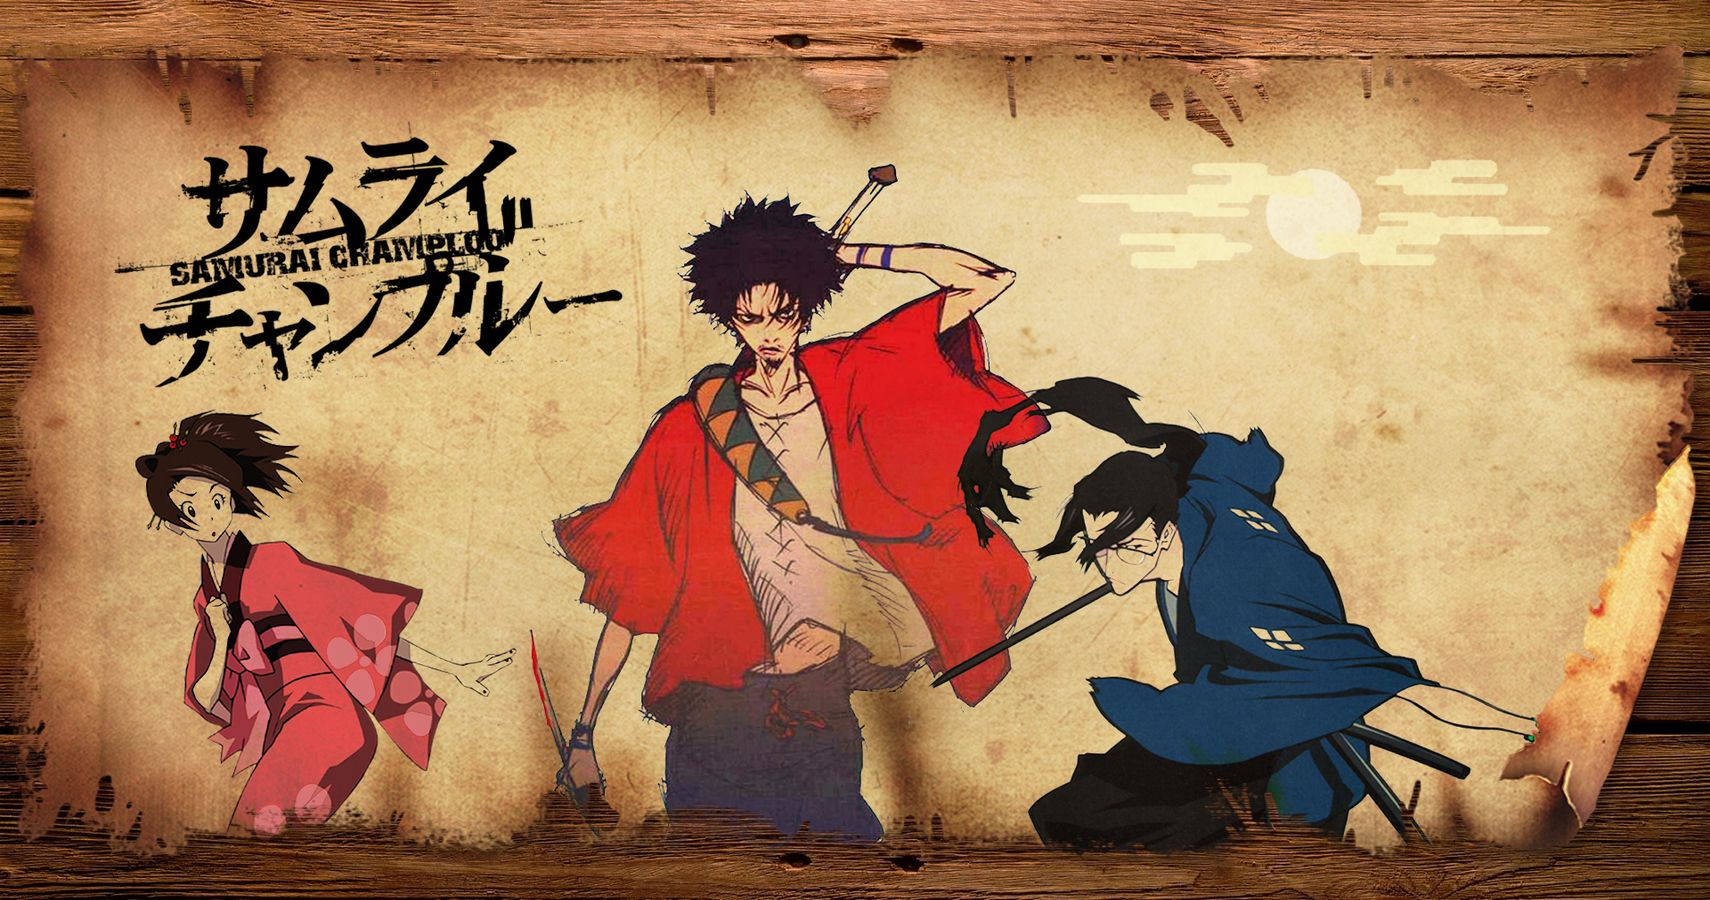 Amazon.com: Samurai Champloo Poster Anime Japanese Wall Art Home Decor  Promo 16x20 Inches: Posters & Prints